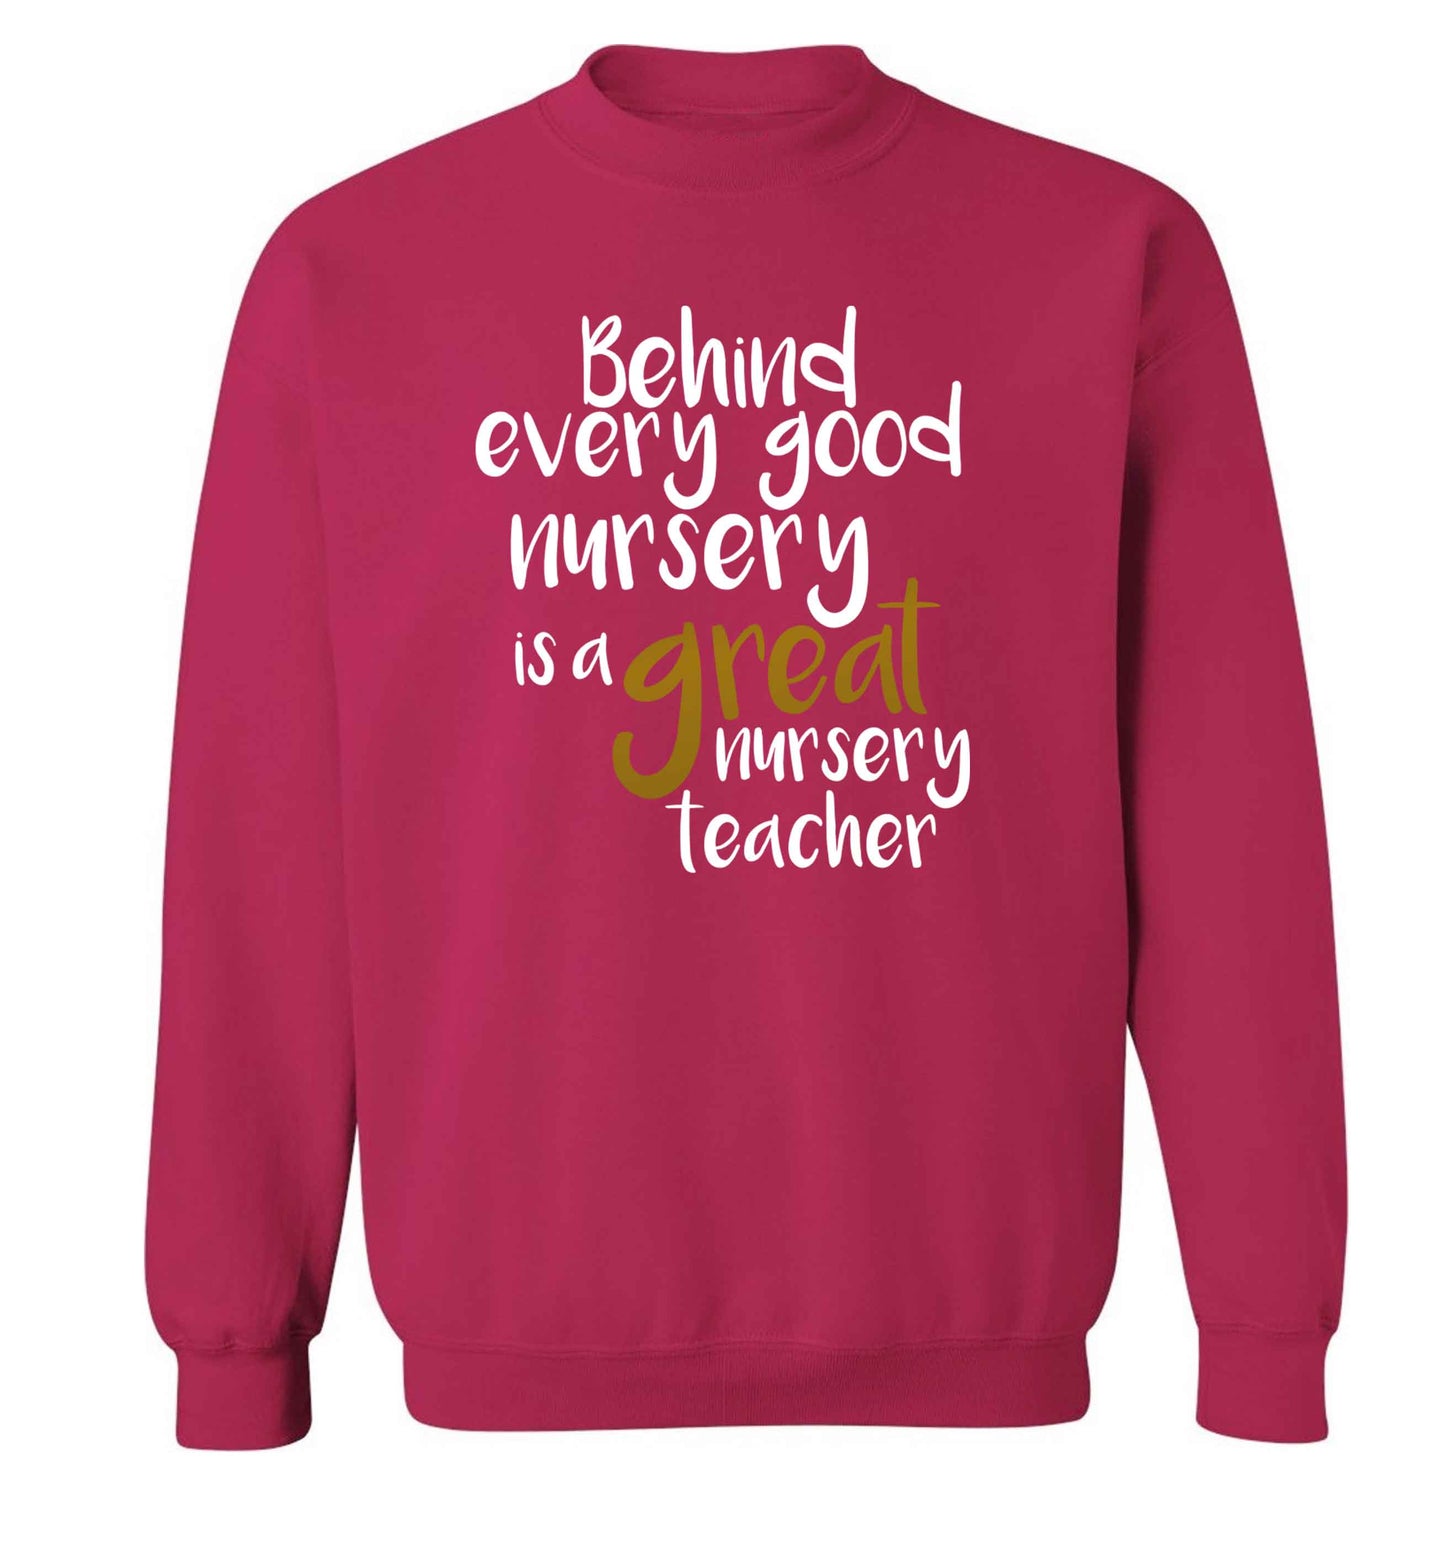 Behind every good nursery is a great nursery teacher Adult's unisex pink Sweater 2XL